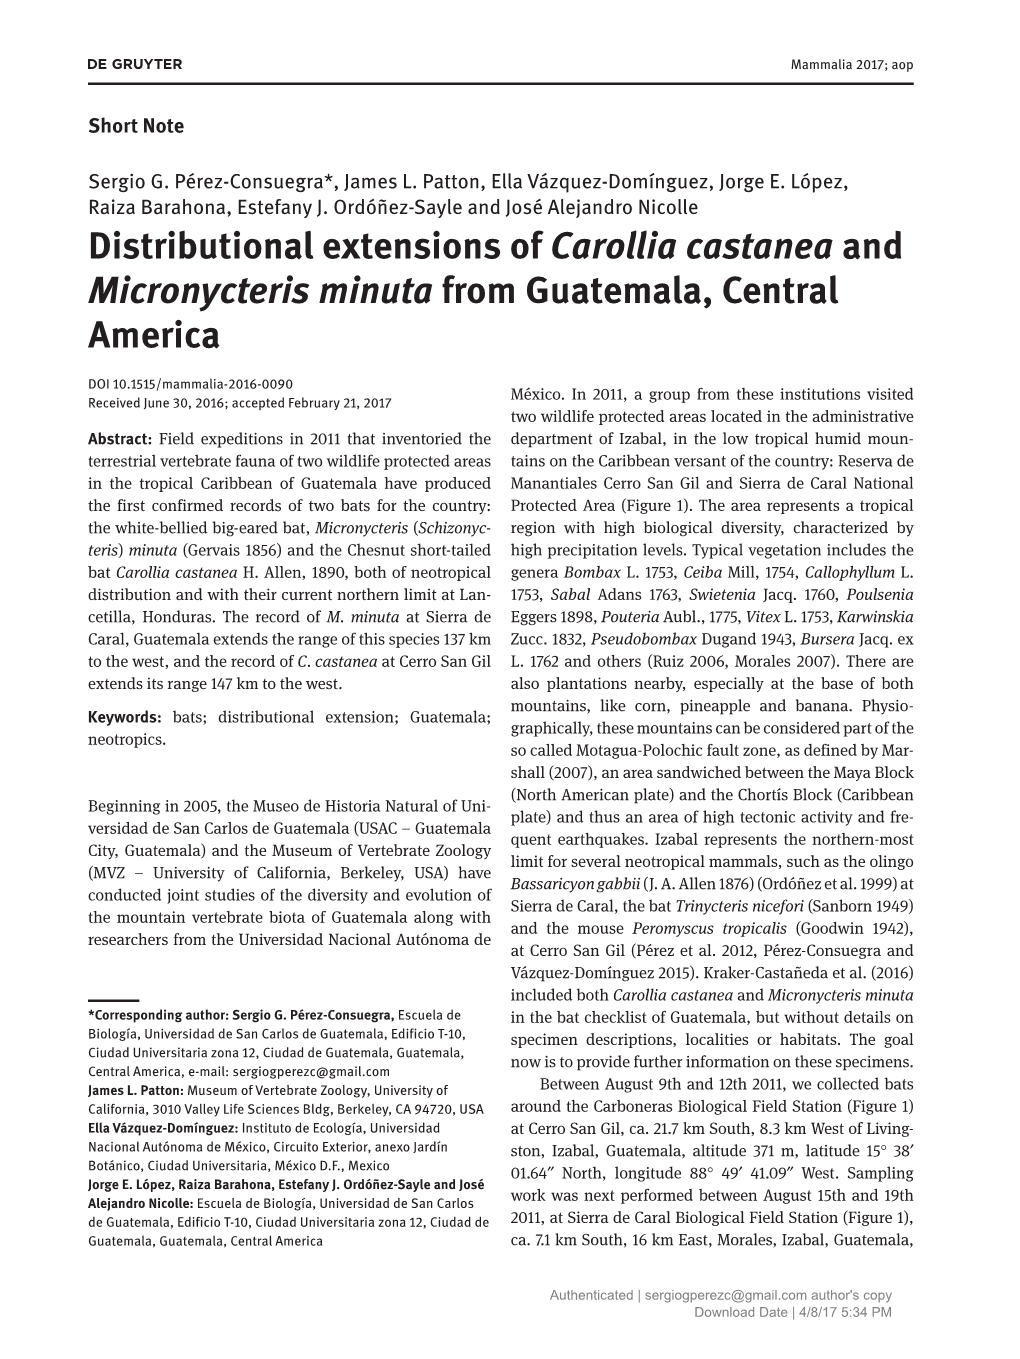 Distributional Extensions of Carollia Castanea and Micronycteris Minuta from Guatemala, Central America